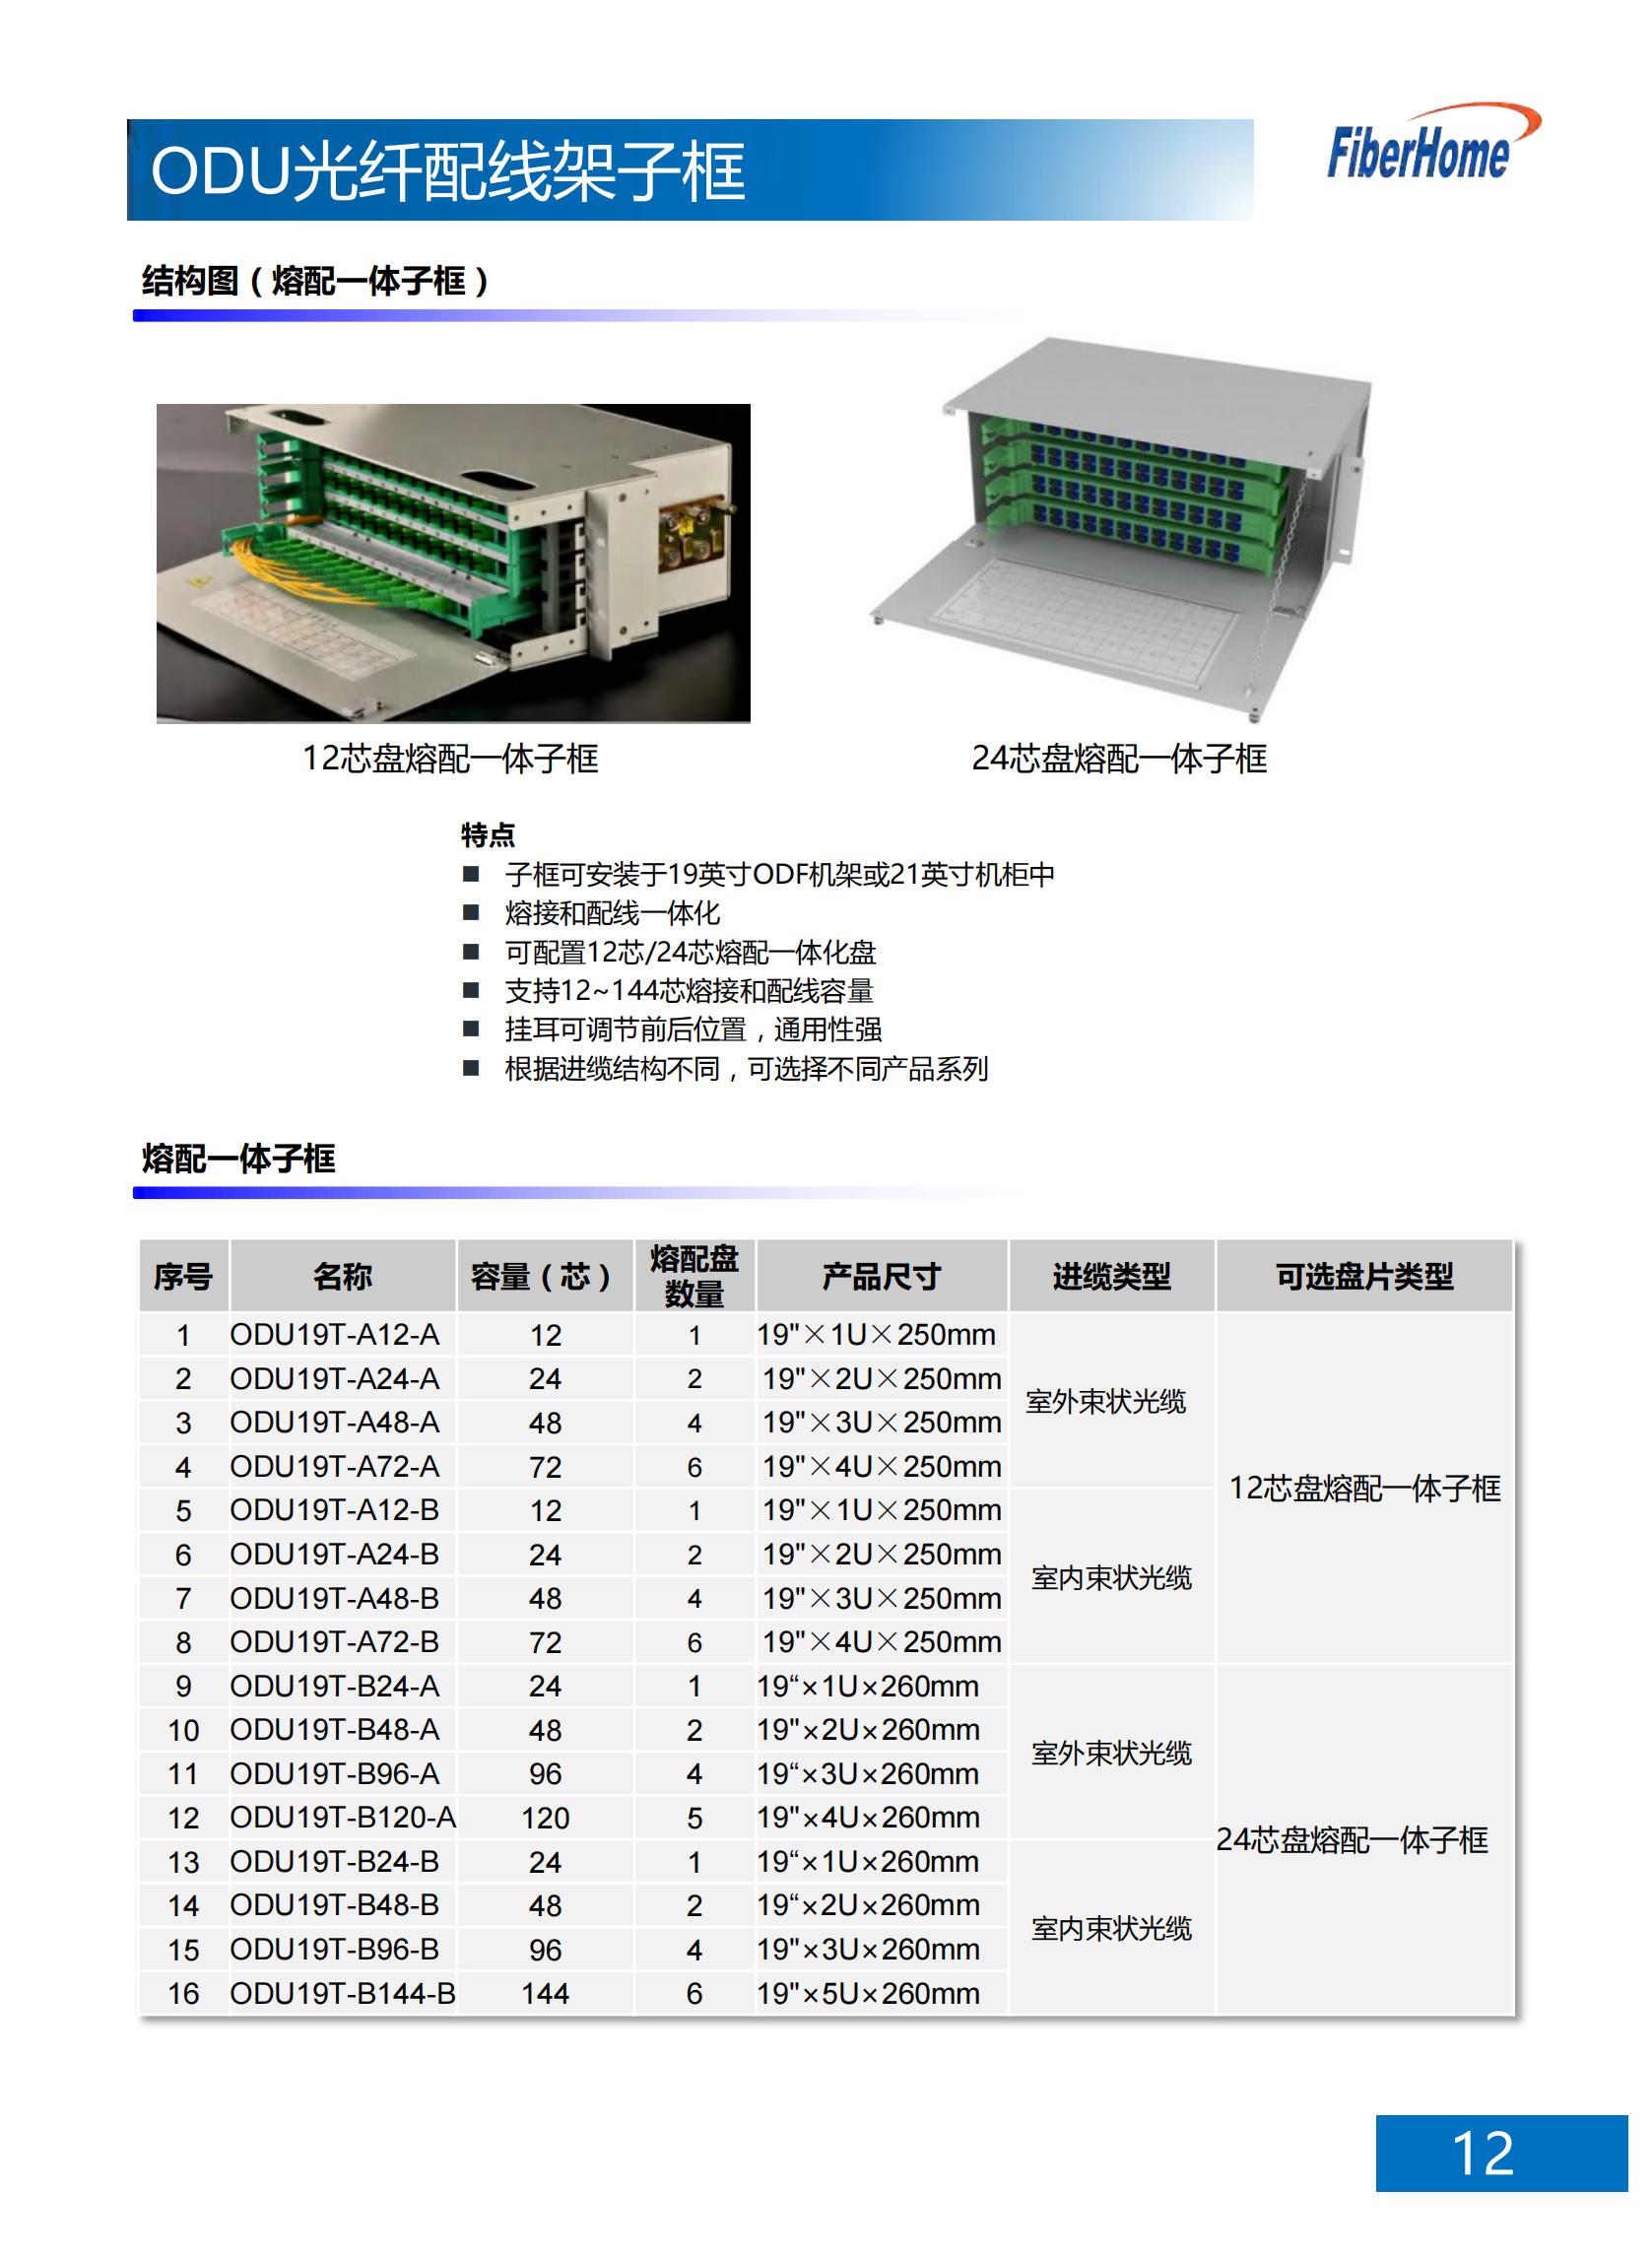 96-core ODU optical fiber distribution shelf frame ODU19T-A1296-B-FC (including 12-core FC fusion integration unit*8)